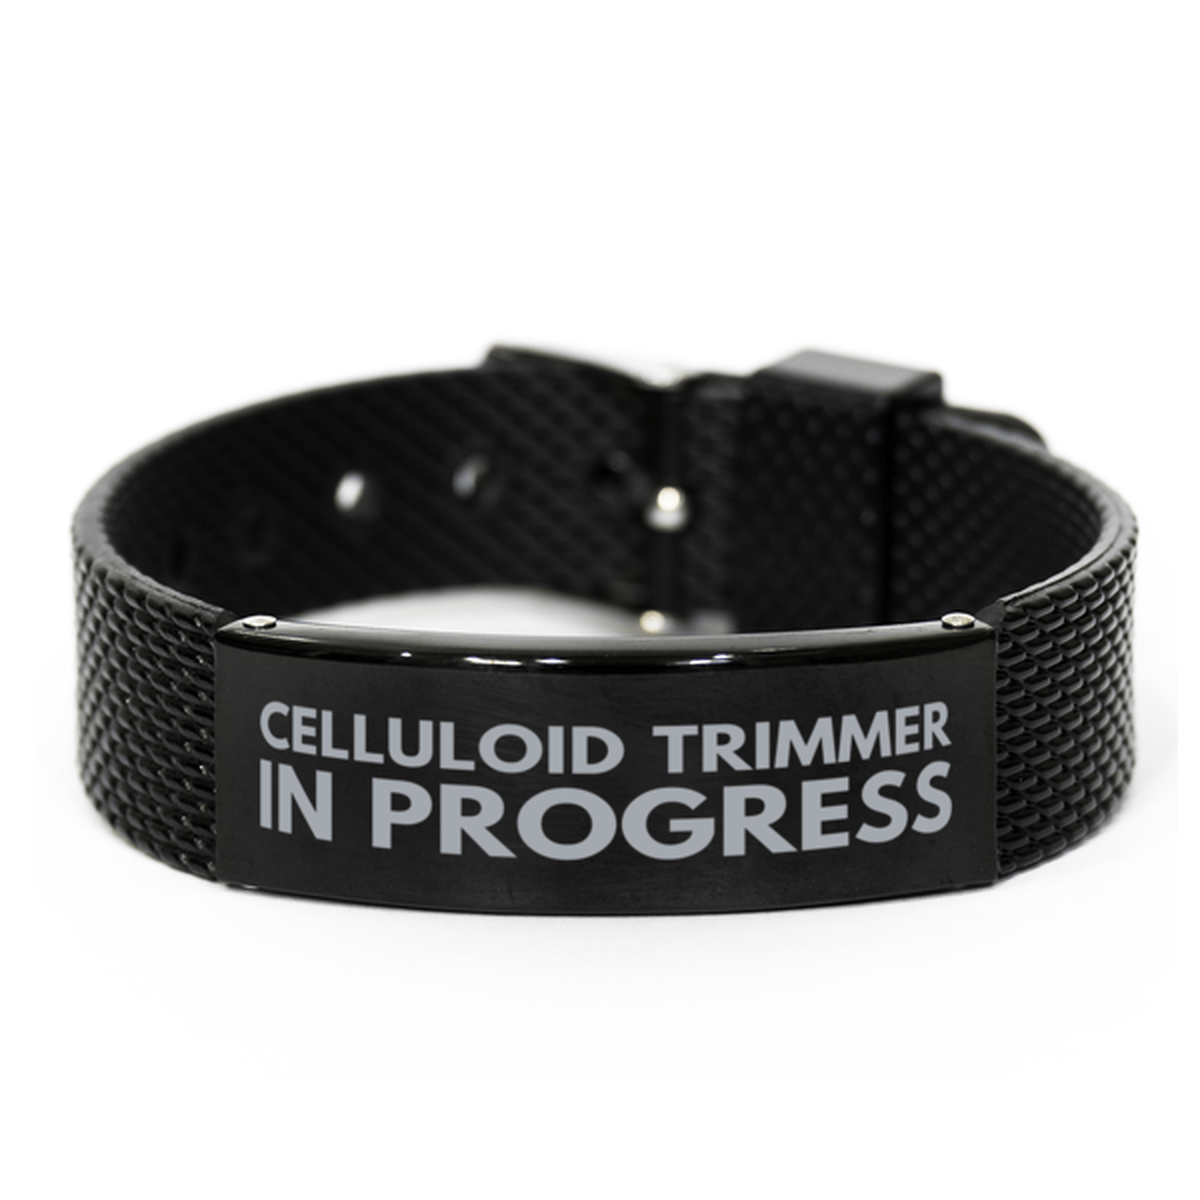 Inspirational Celluloid Trimmer Black Shark Mesh Bracelet, Celluloid Trimmer In Progress, Best Graduation Gifts for Students